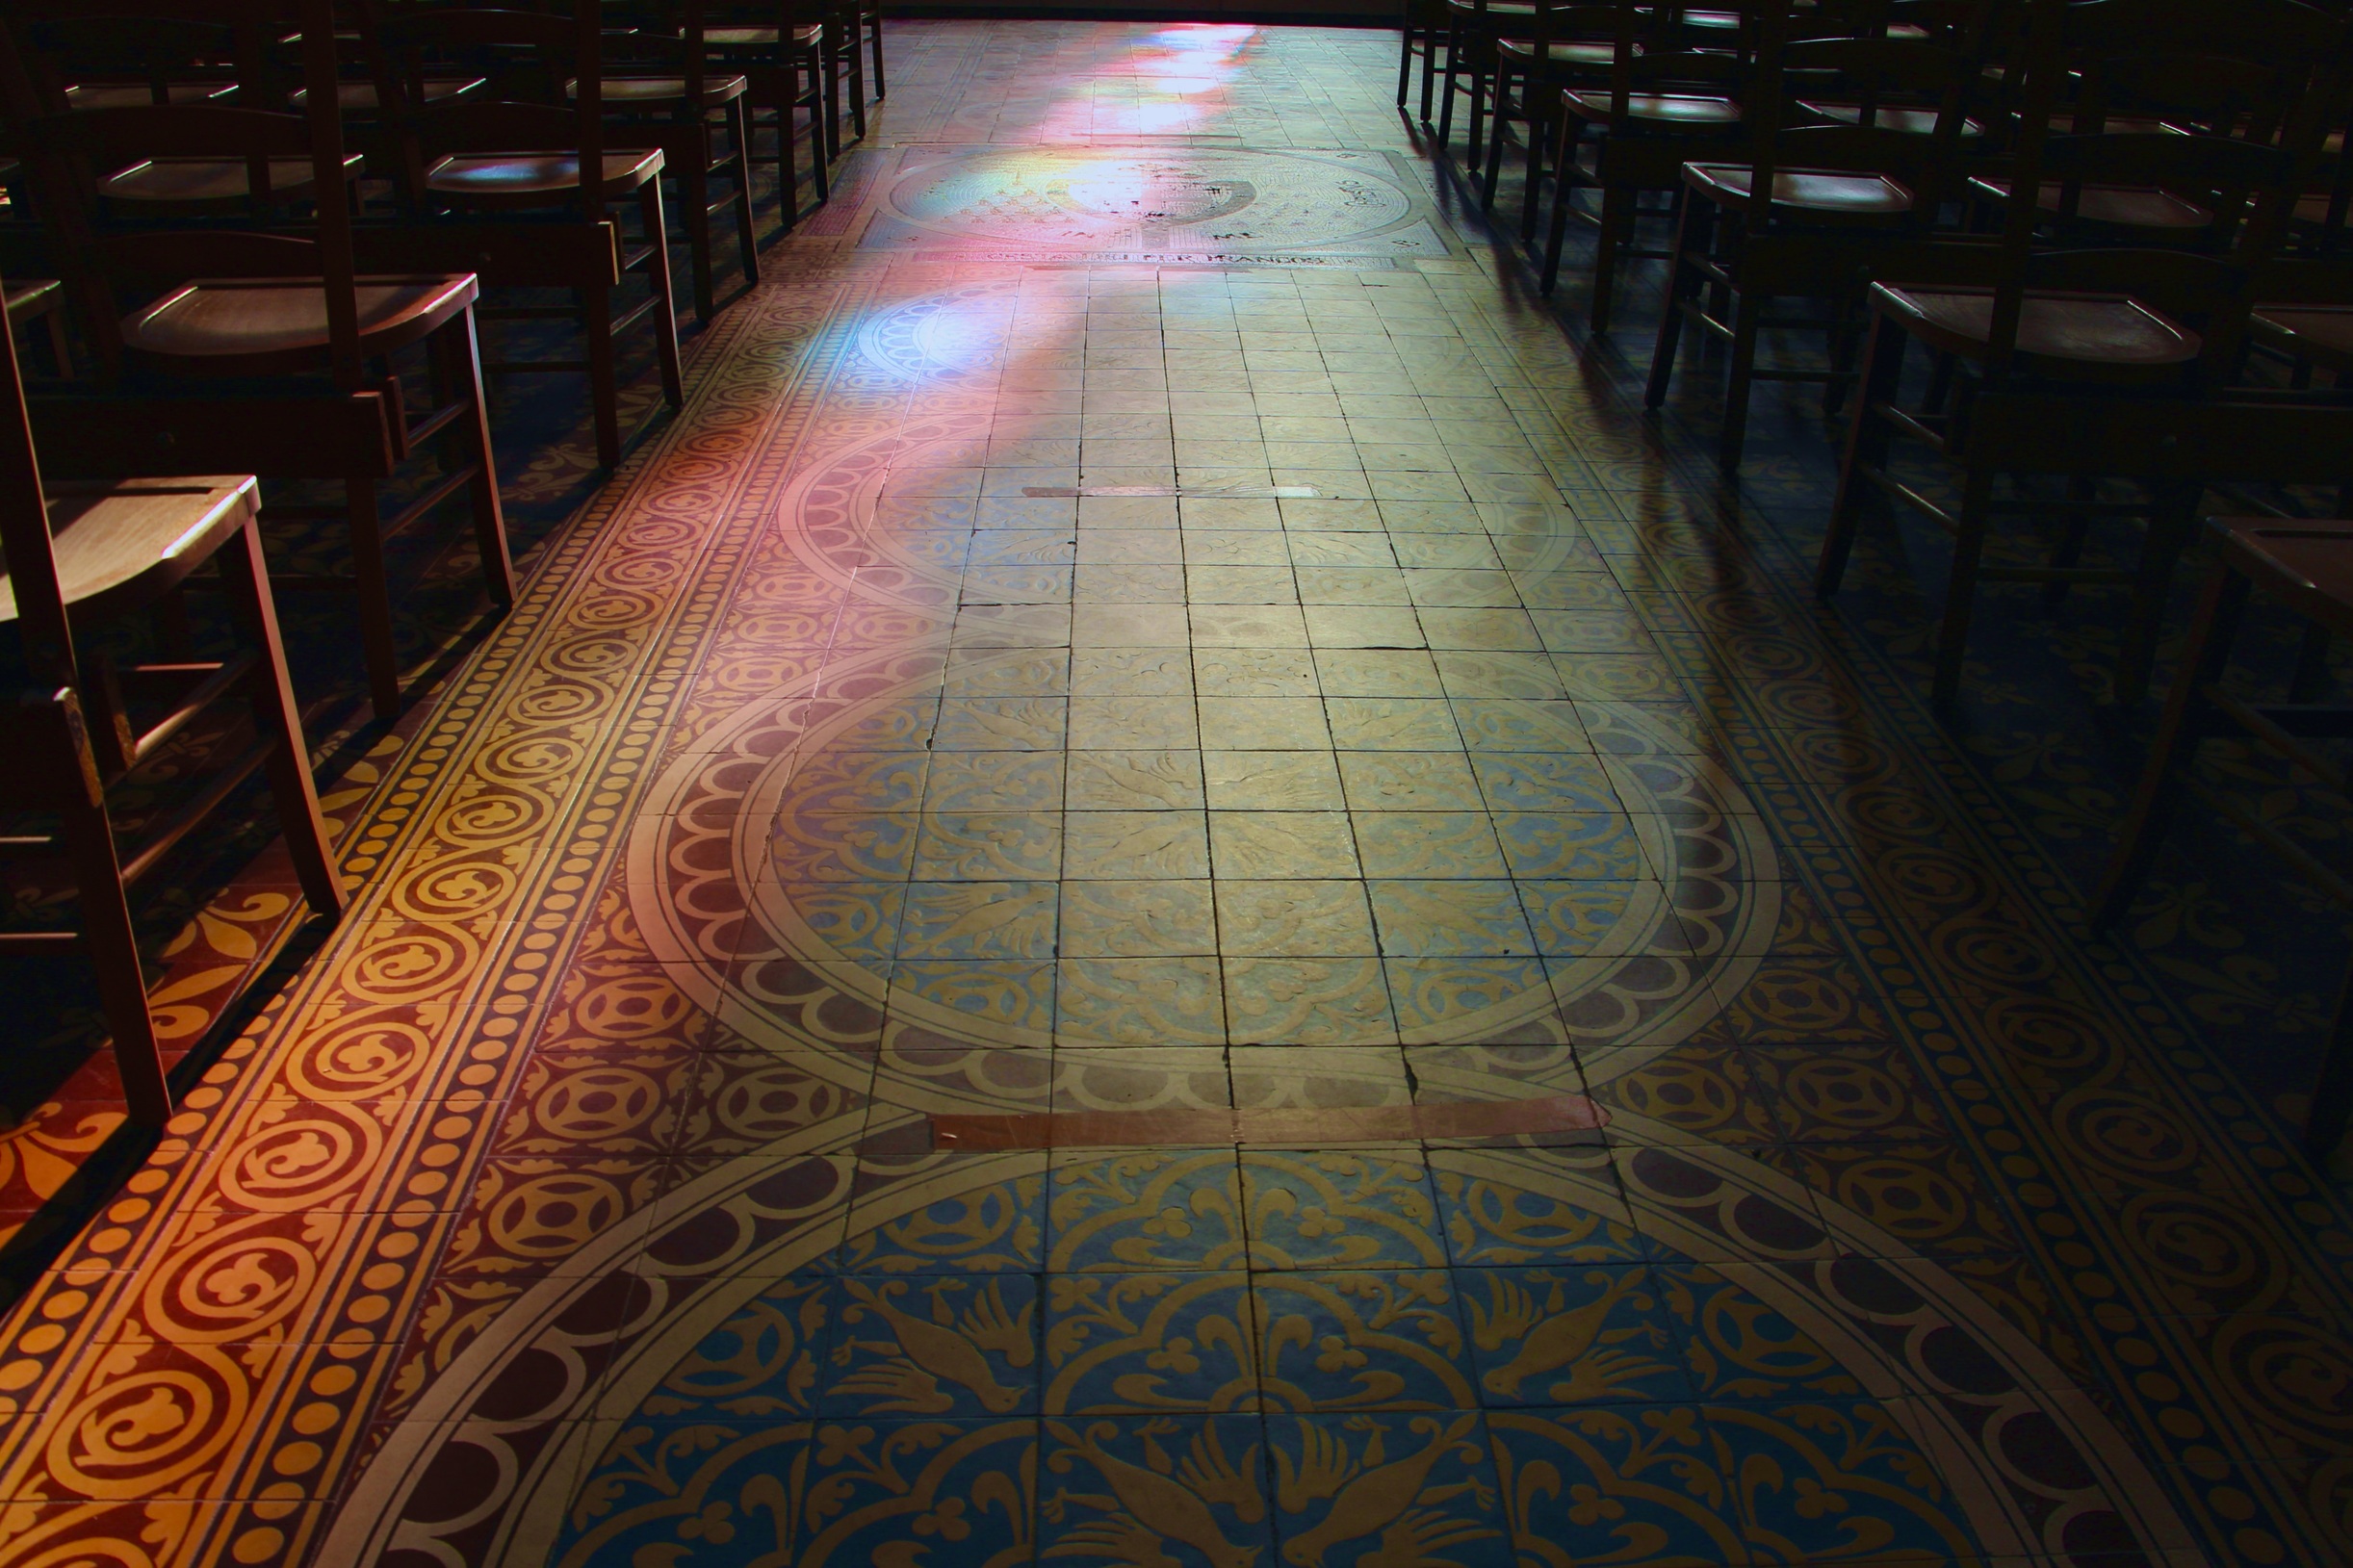 Light shines through the stained glass of the Basilique Sainte-Clotilde.